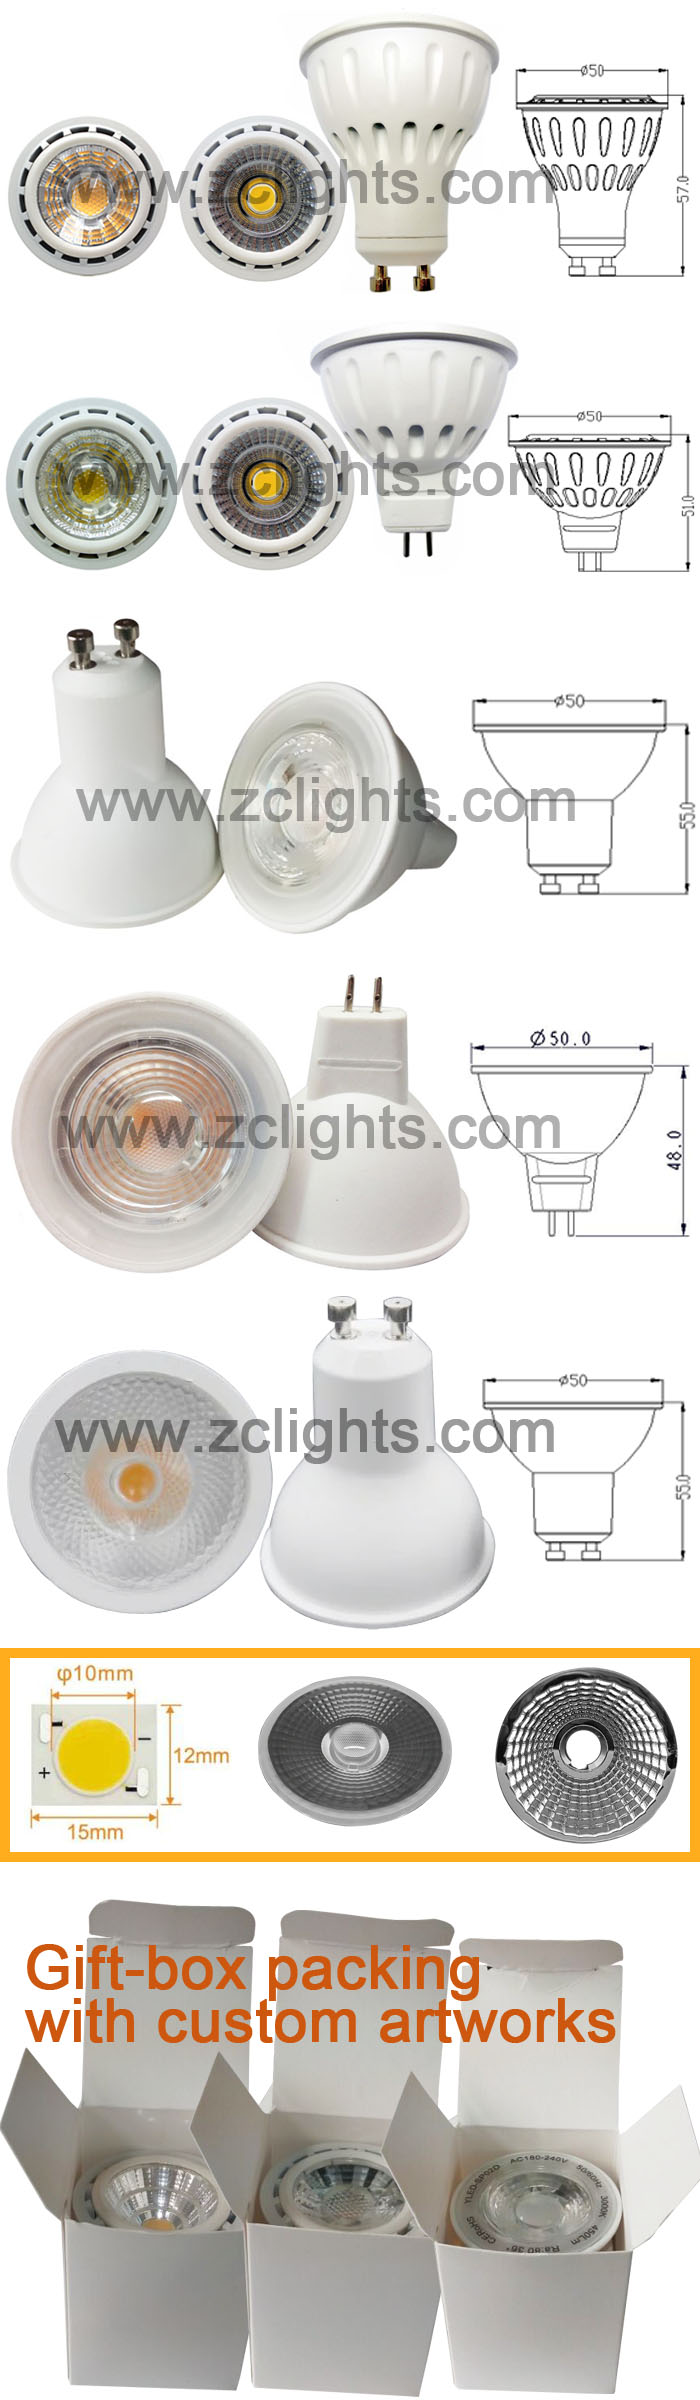 Best Price LED Spotlight 7W GU10 LED Lamp Dimmable